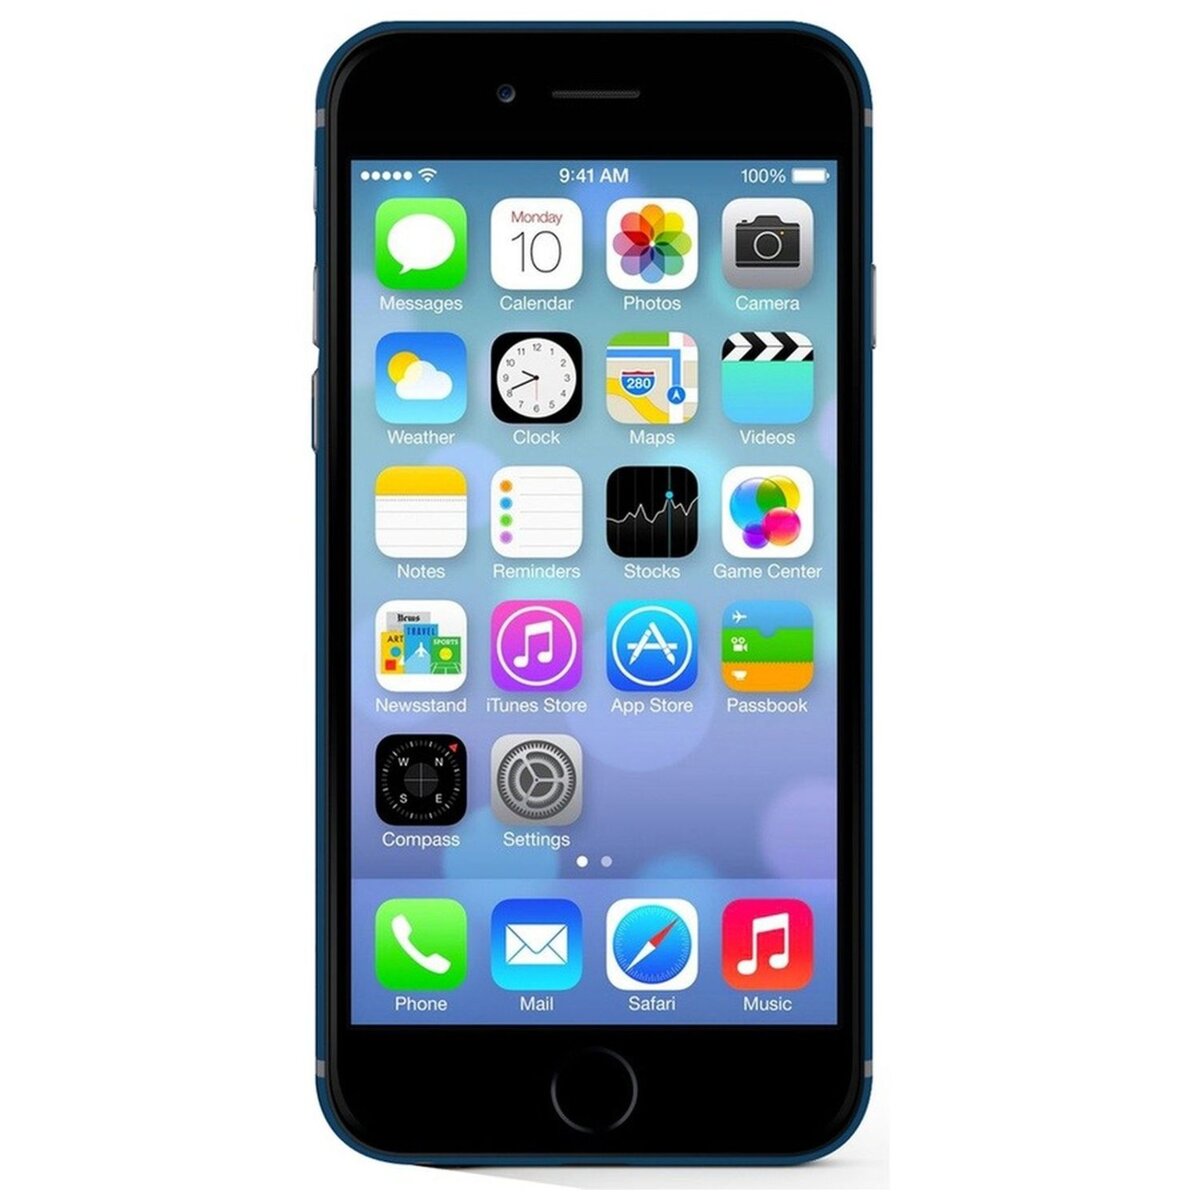 APPLE iPhone 6 - Reconditionné Grade A++ - 16 Go - 4.7 pouces - Bleu - 4G - Remadeinfrance